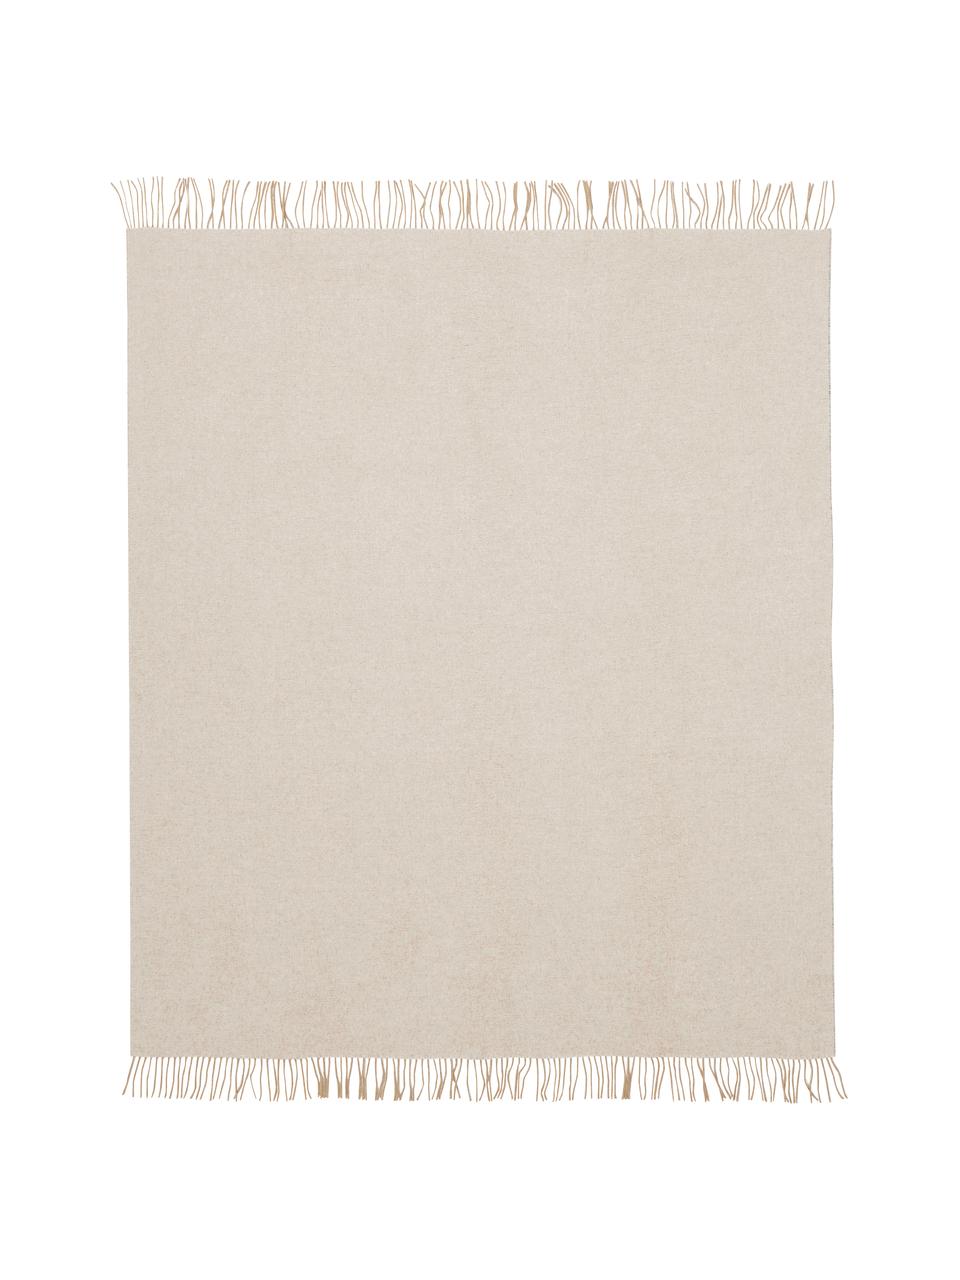 Plaid in cashmere color crema-beige Liliana, 80% lana, 20% cashmere, Beige, crema, Larg. 130 x Lung. 170 cm